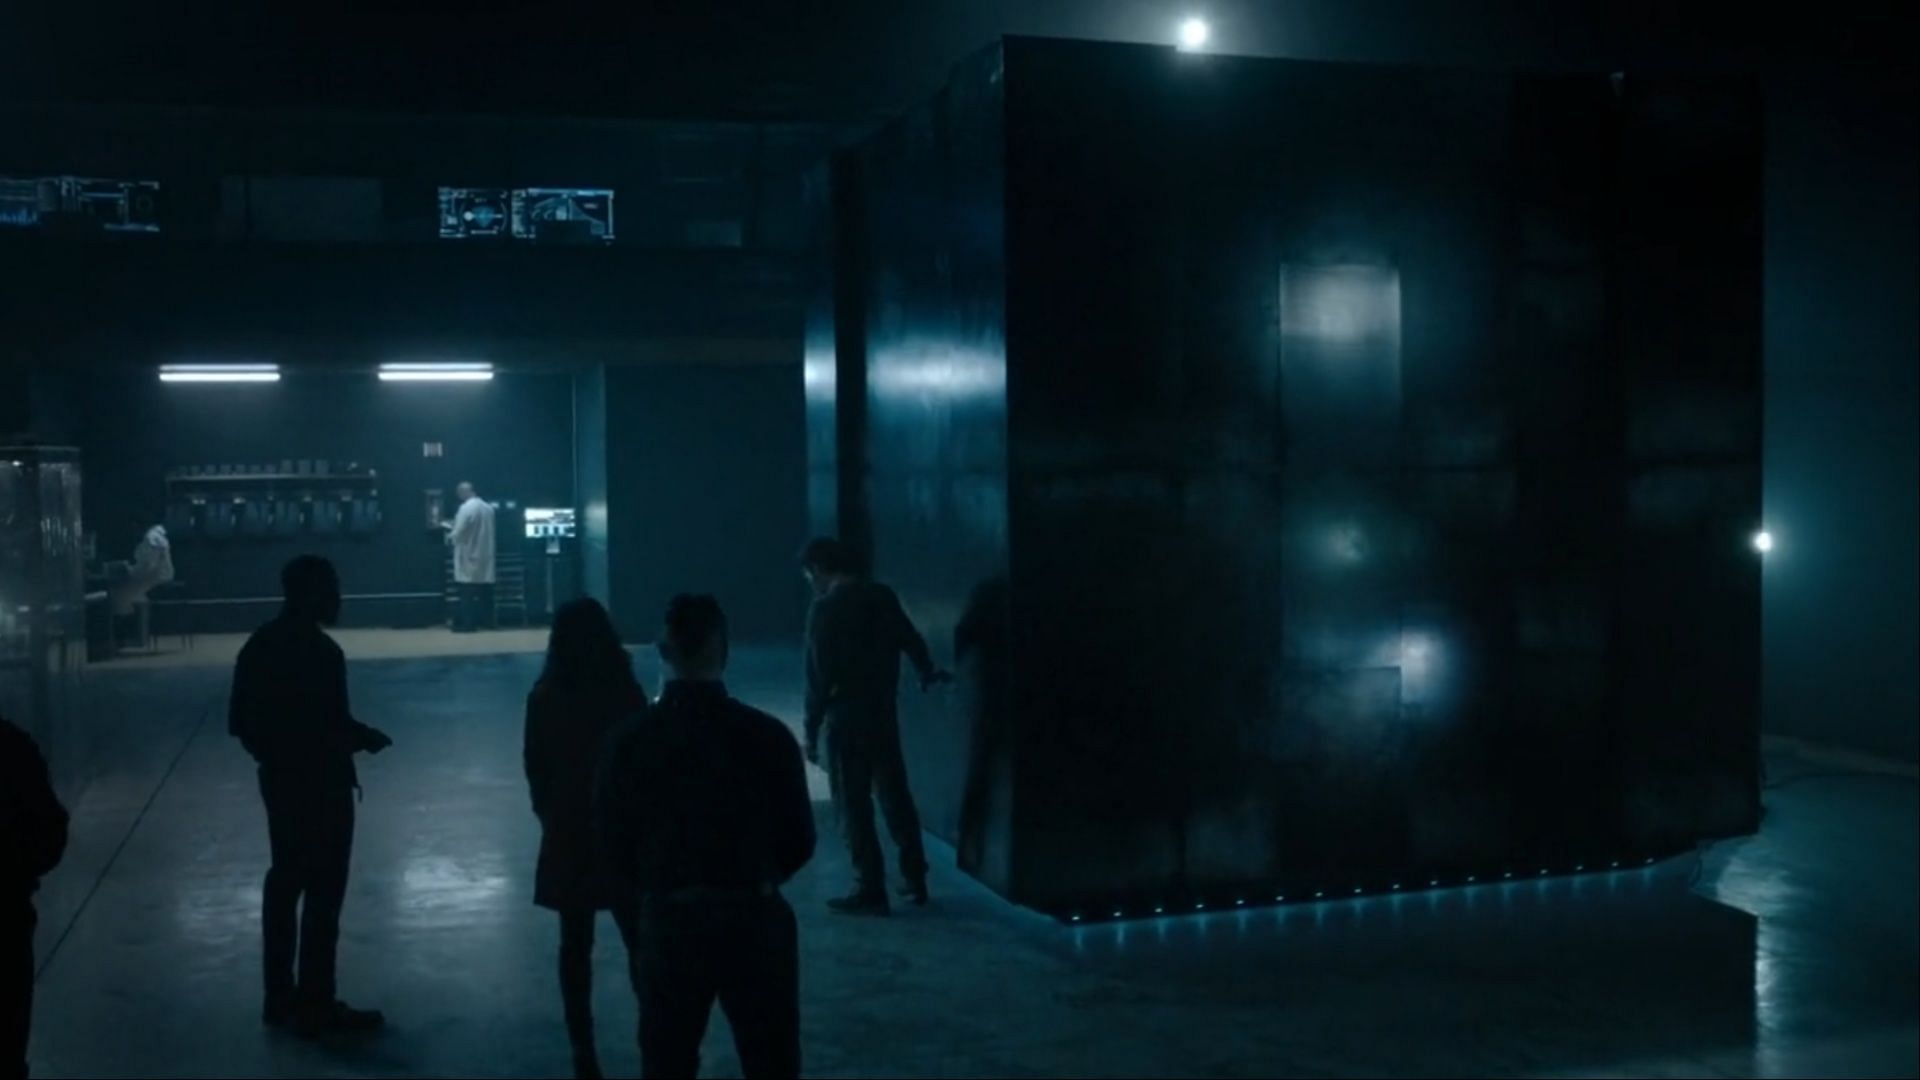 Jason 1 finally sees the Box in Dark Matter episode 3 (Image via Apple TV+)